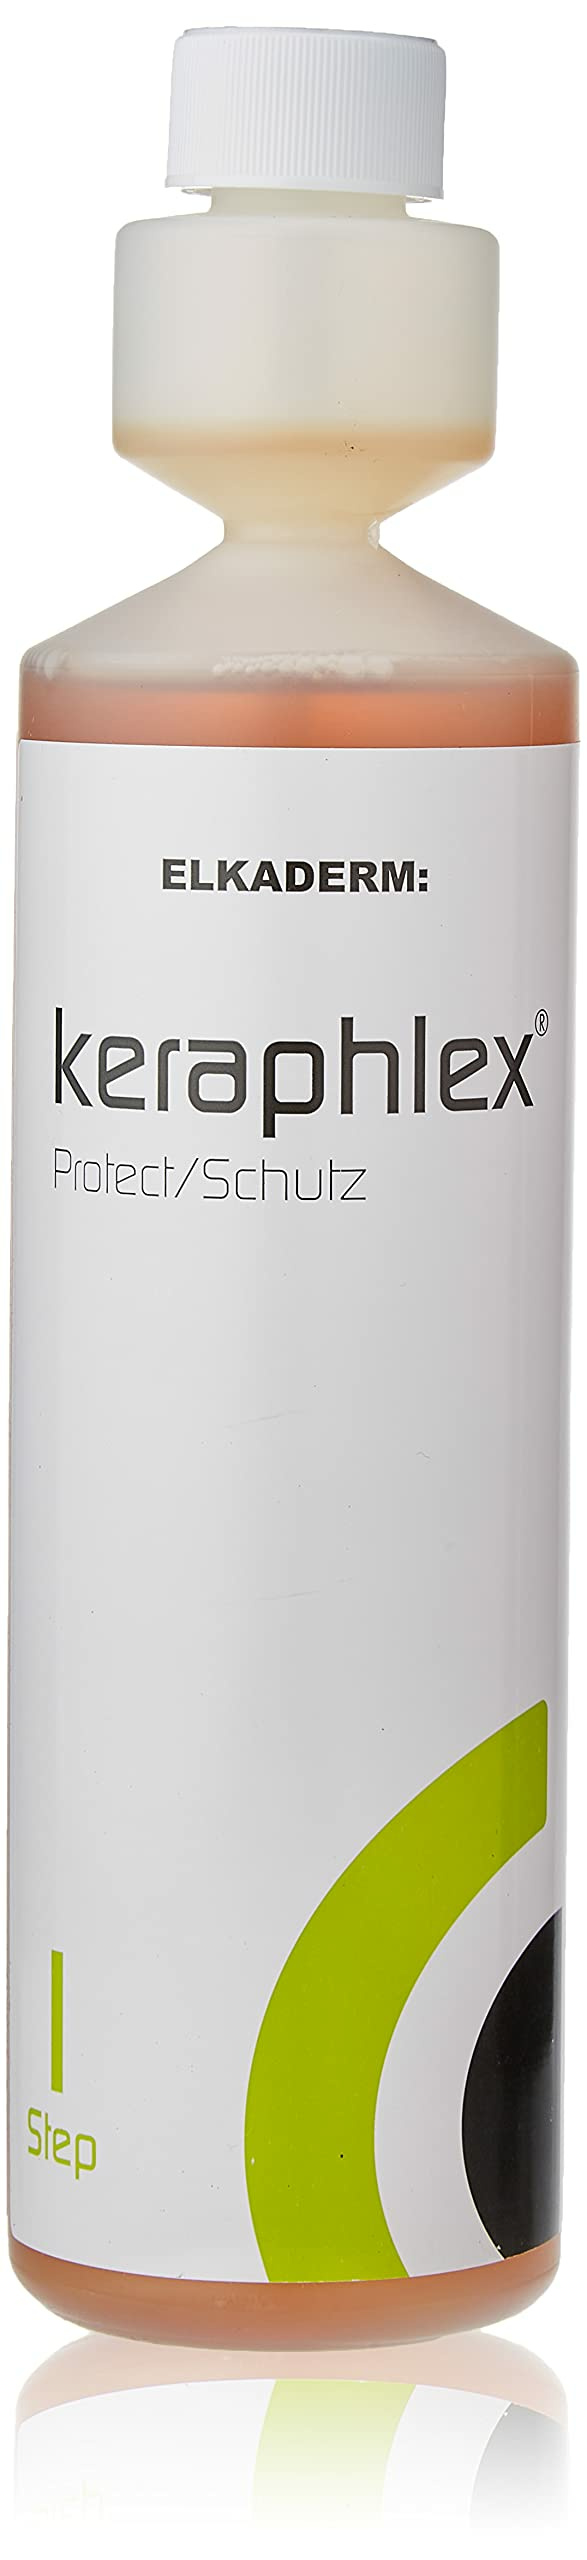 Keraphlex Step 1 Refill 500ml